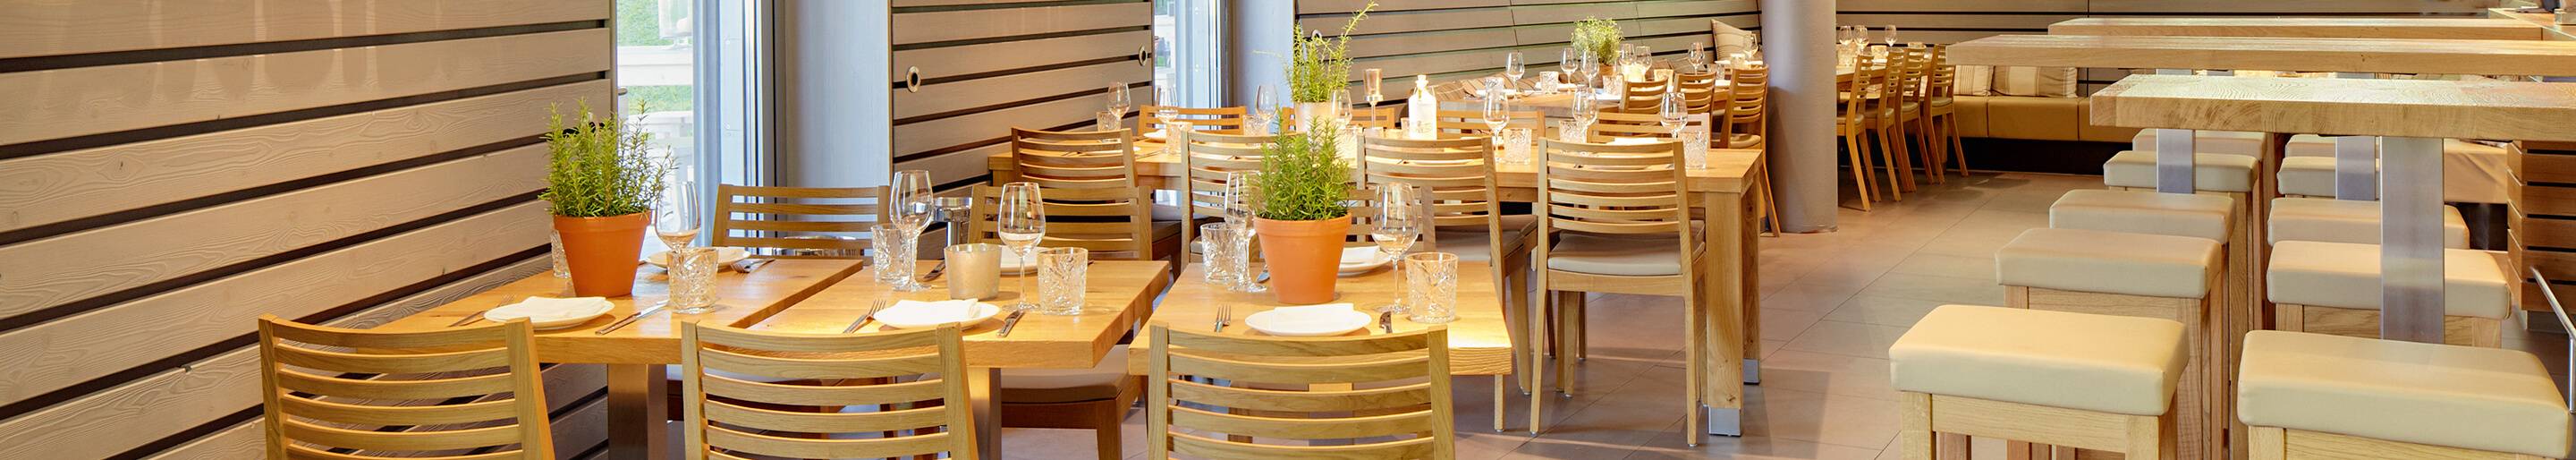 Indoor Restaurant Furniture for your hotel or restaurant